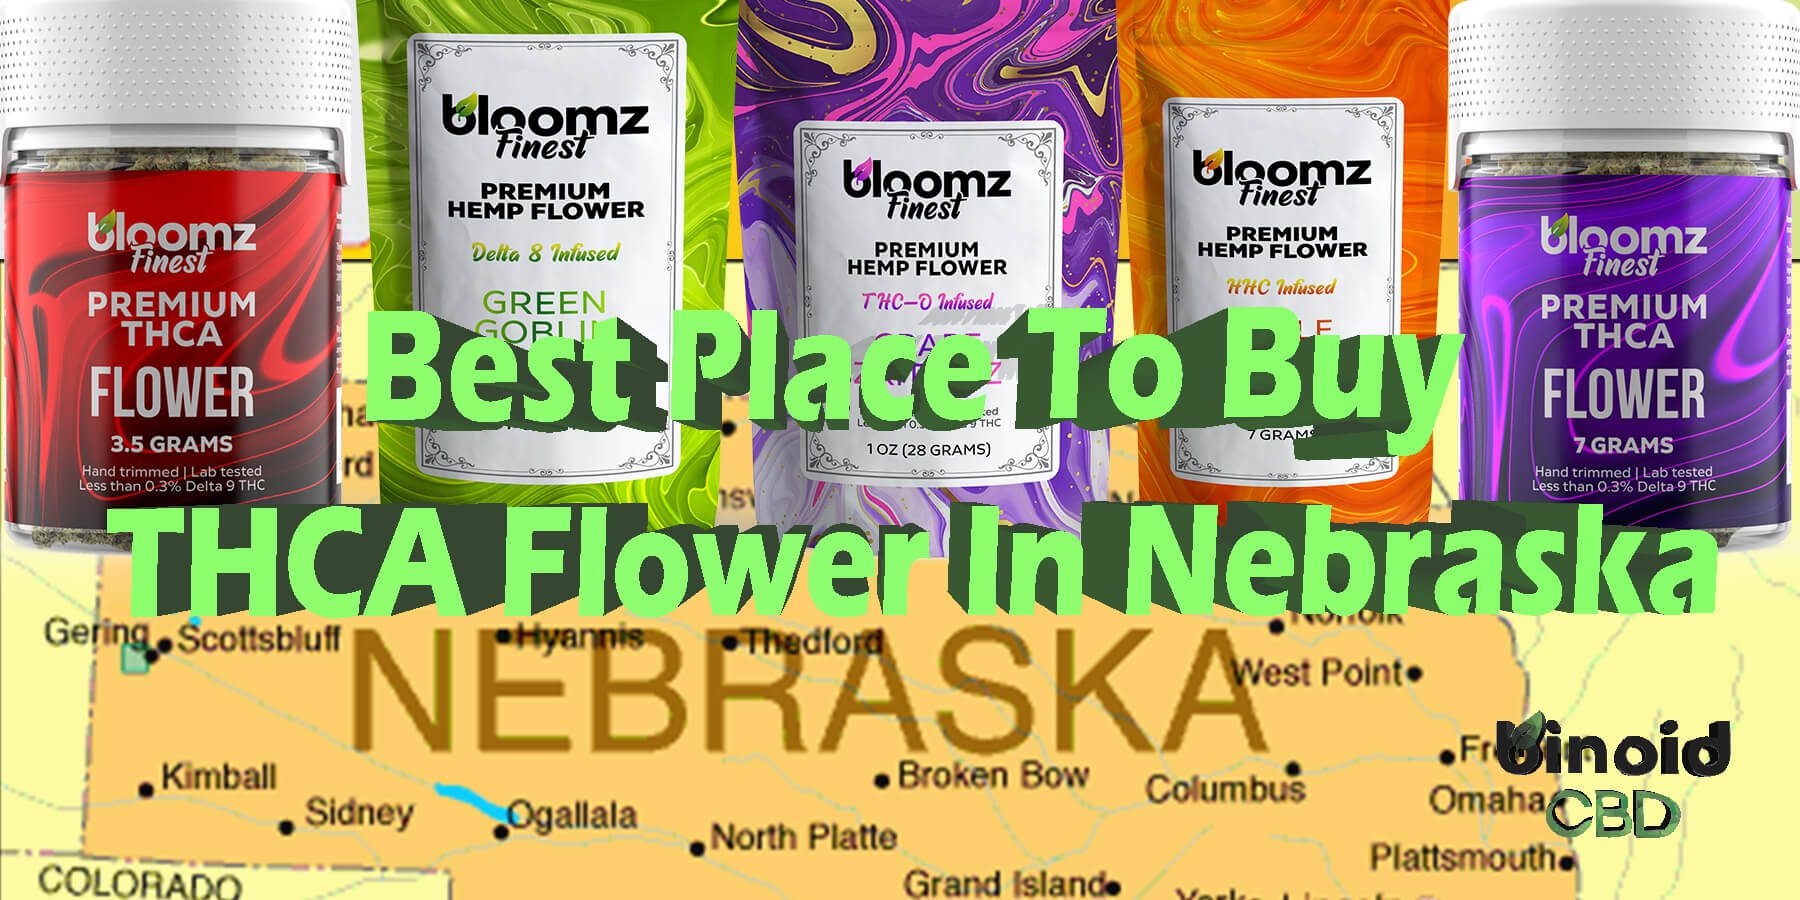 Buy THCA Flower Hemp Nebraska Get Online Near Me For Sale Best Brand Strongest Real Legal Store Shop Reddit